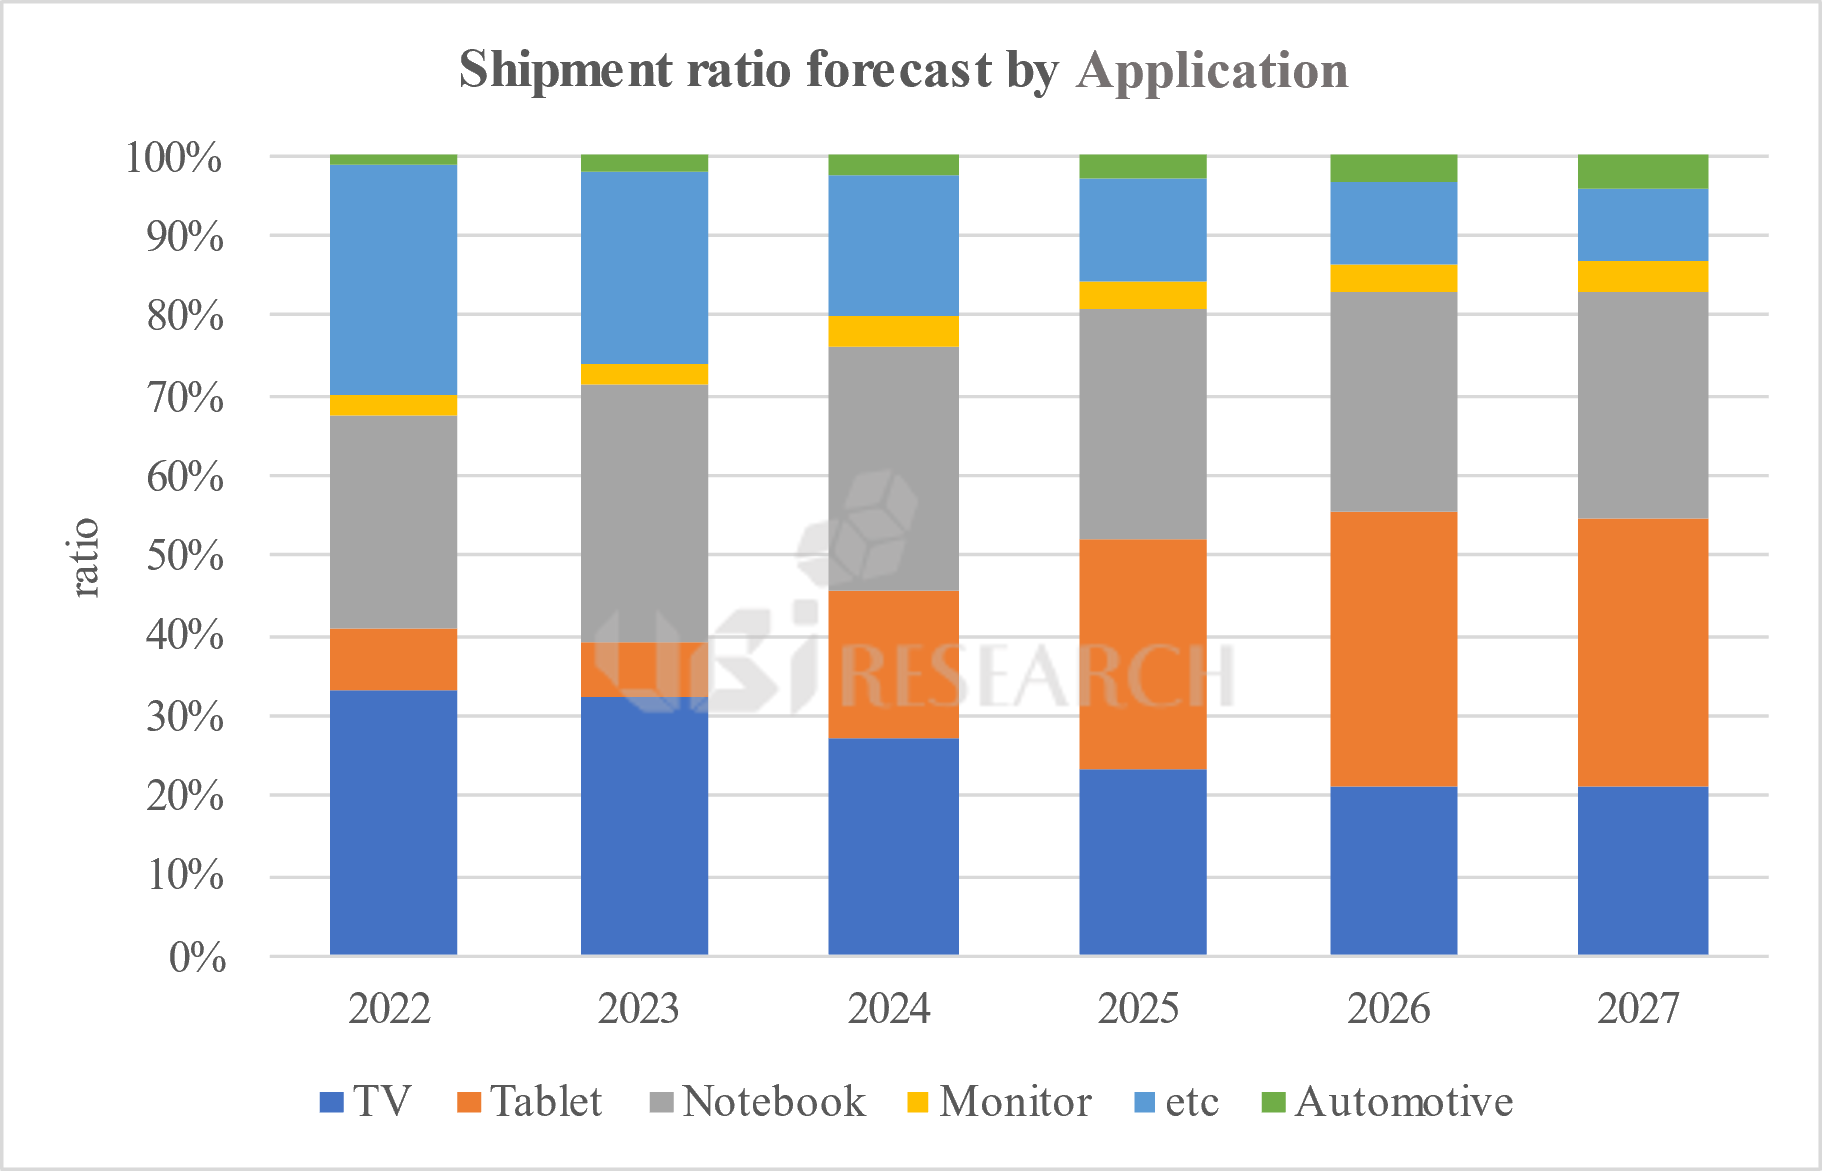 Shipment ratio forecast by application